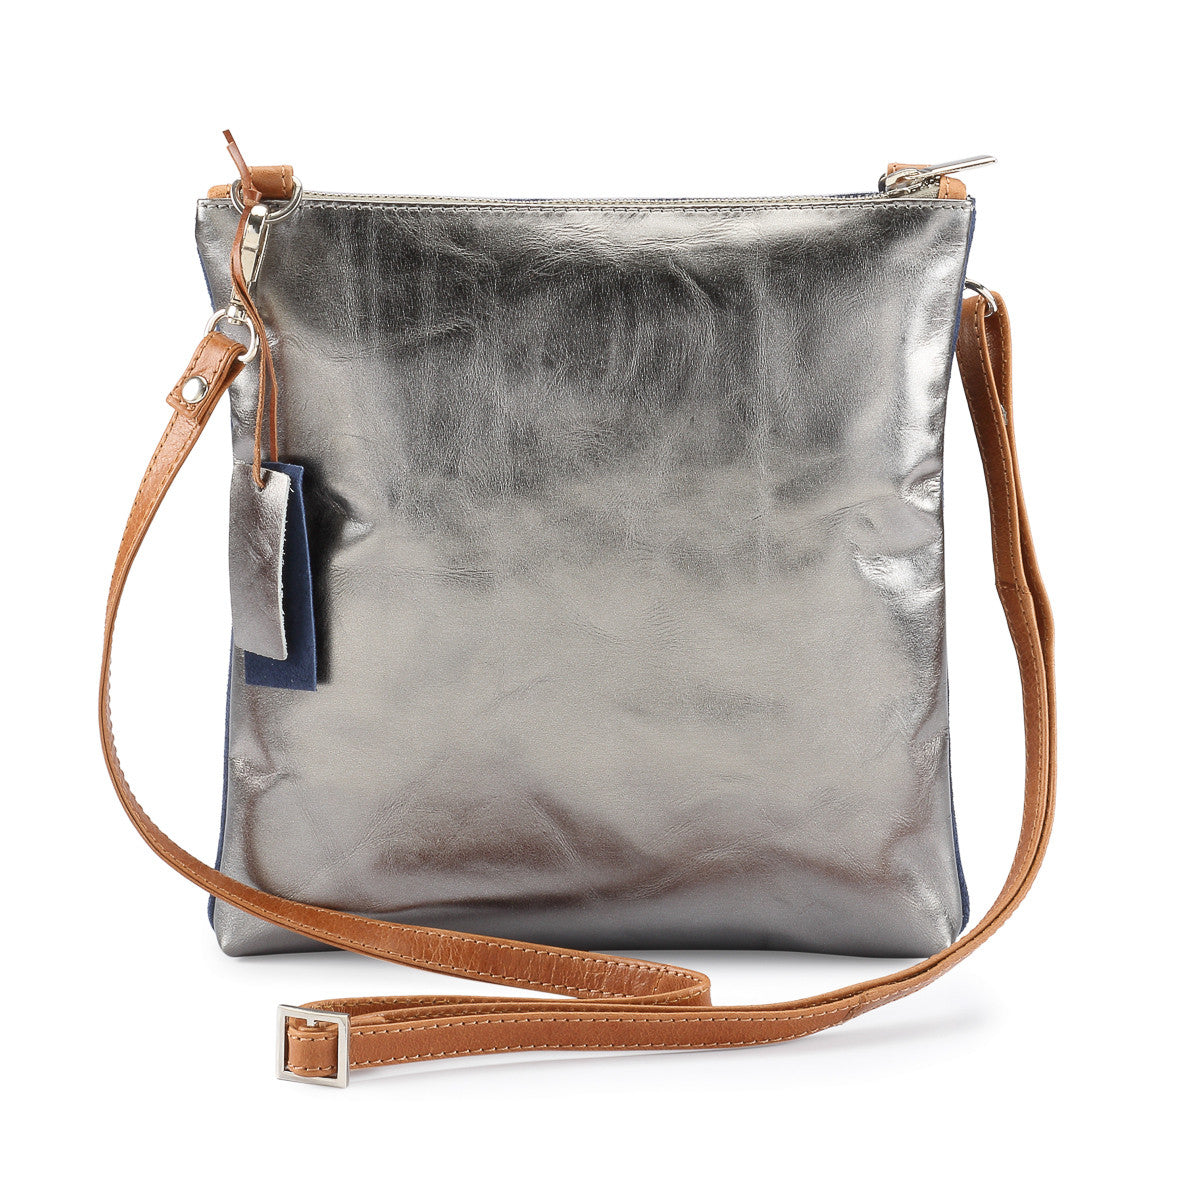 Metallic Rimor Anna 2 way leather messenger clutch bag #LW12 pewter